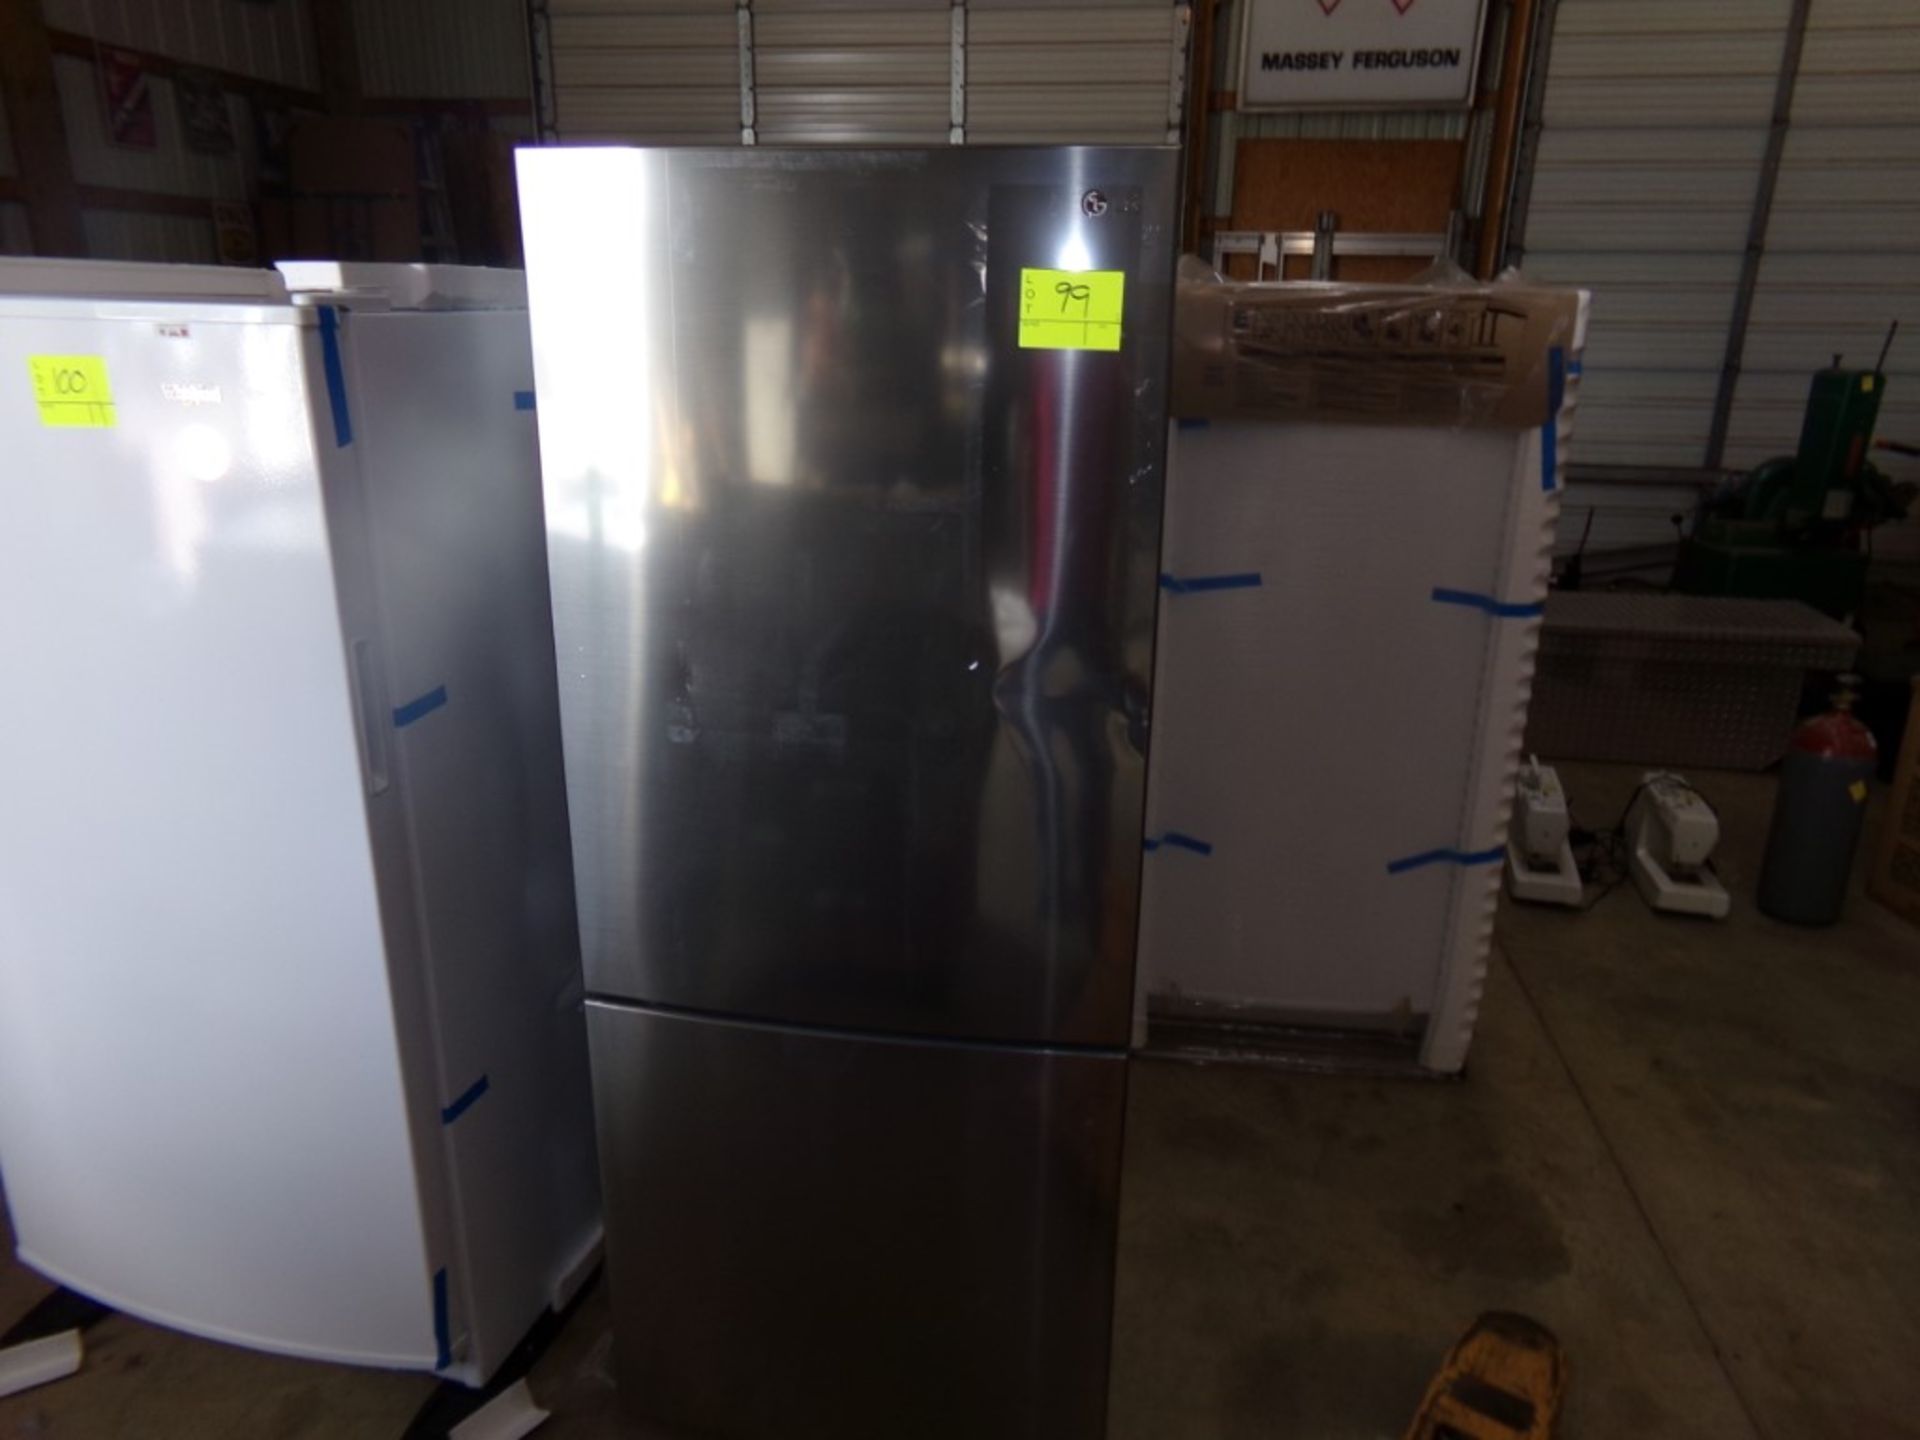 LG Dark Stainless Steel Model LBNC15231V Refrigerator with Bottom Freezer, FRONT DAMAGE, New,